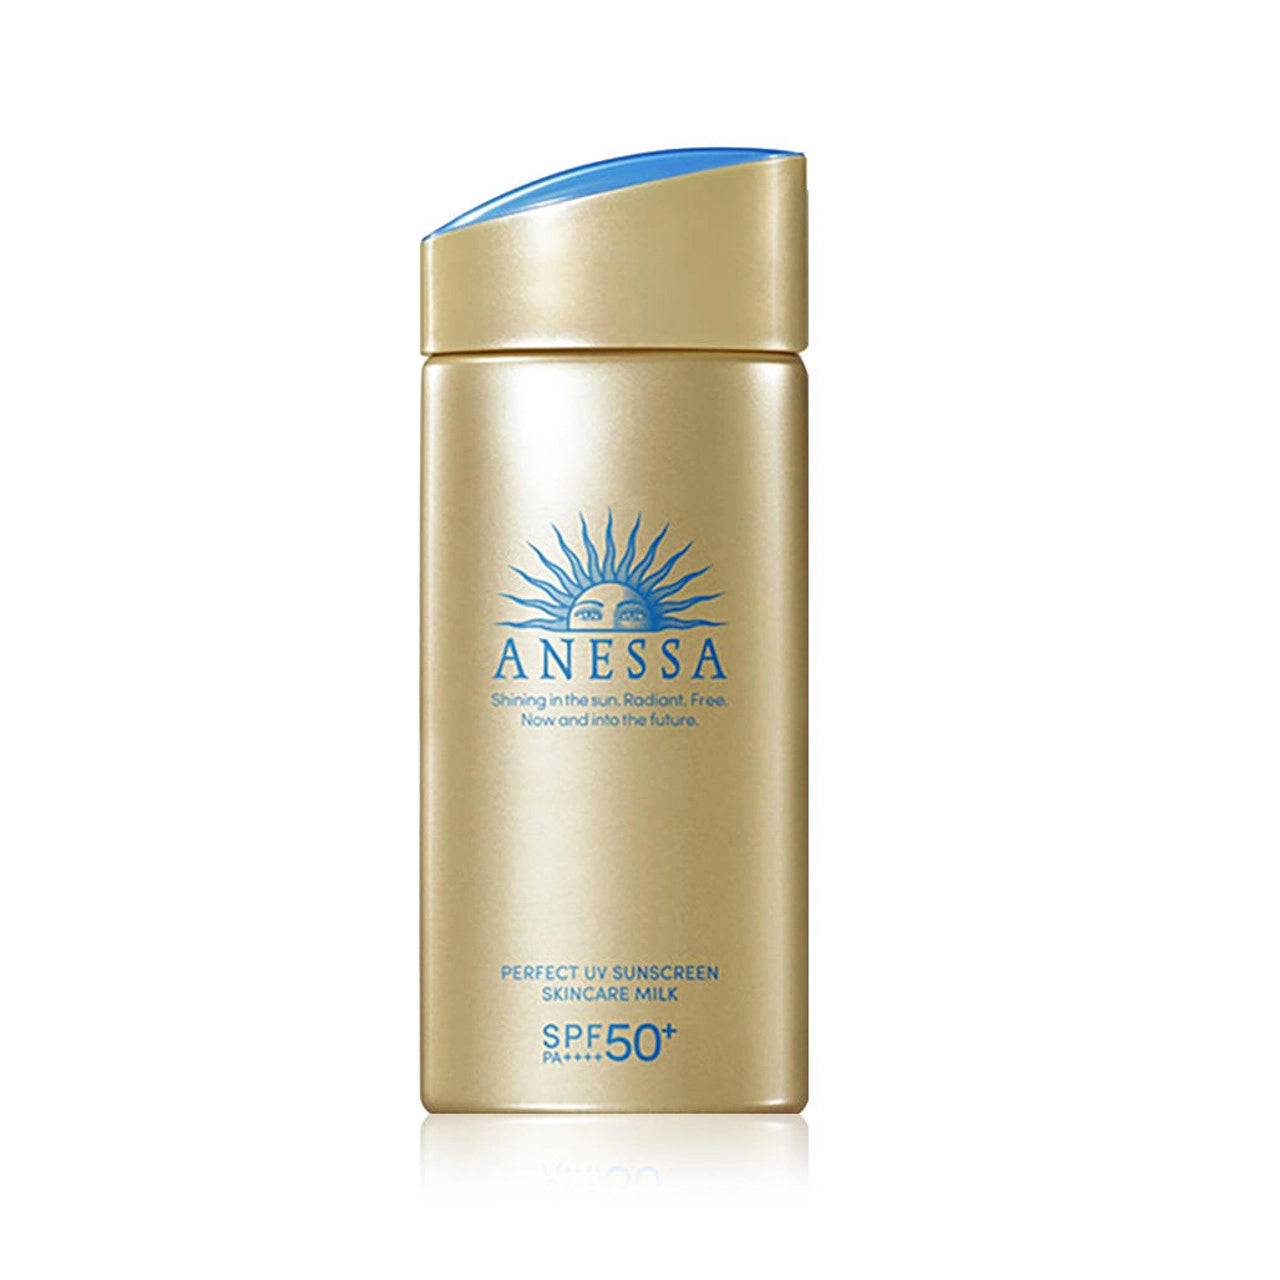 Anessa Perfect UV Sunscreen Milk SPF50+ PA+ Beauty Shiseido   